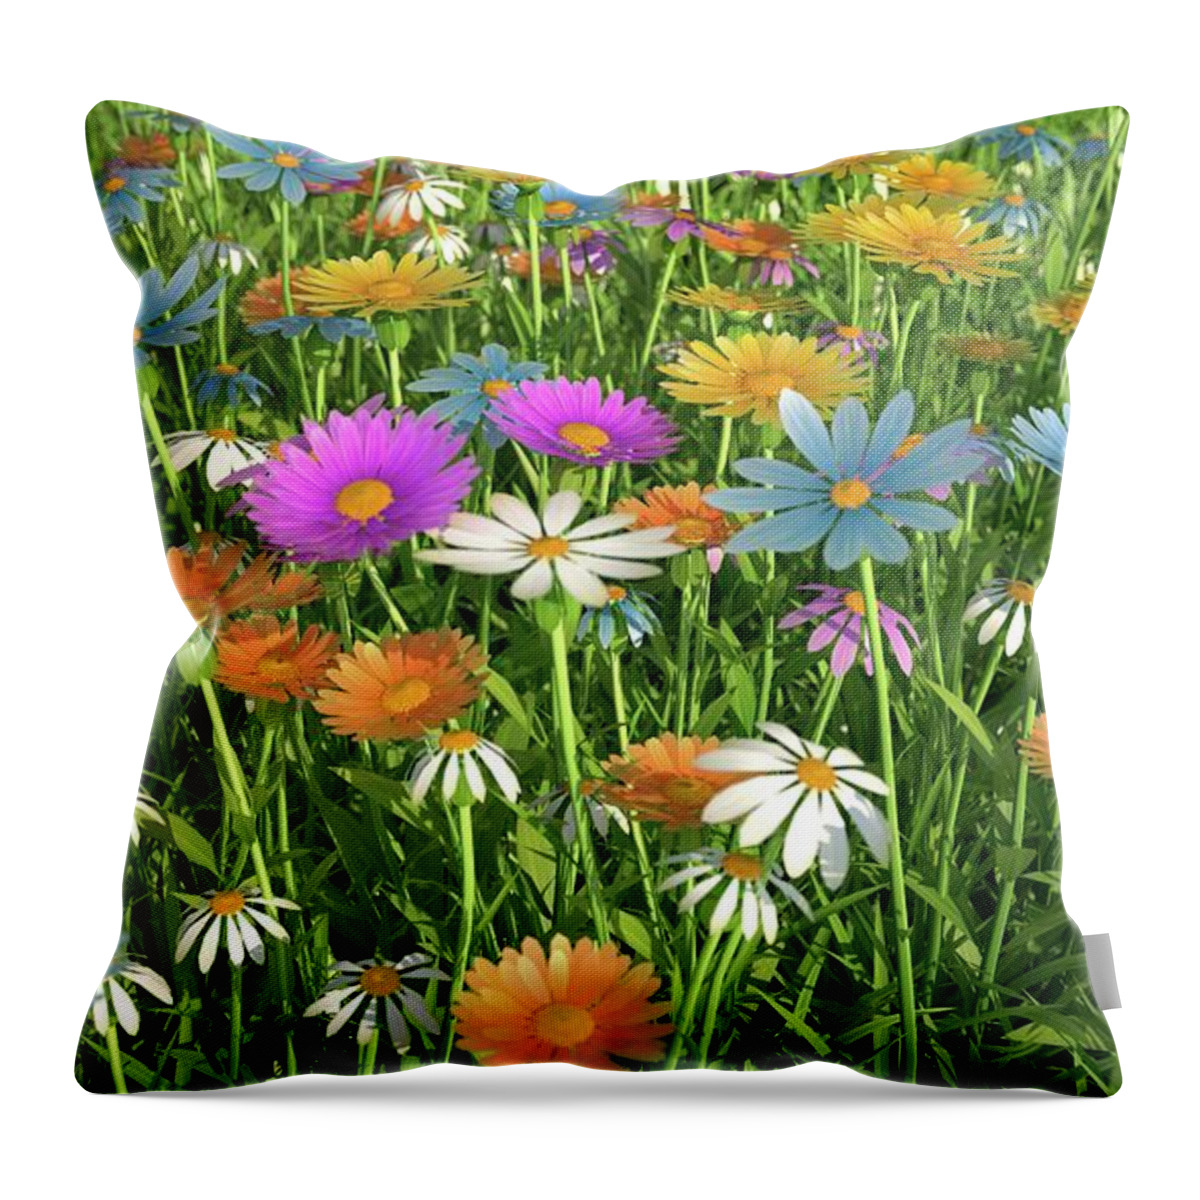 Grass Throw Pillow featuring the digital art Wildflower Meadow, Artwork by Leonello Calvetti